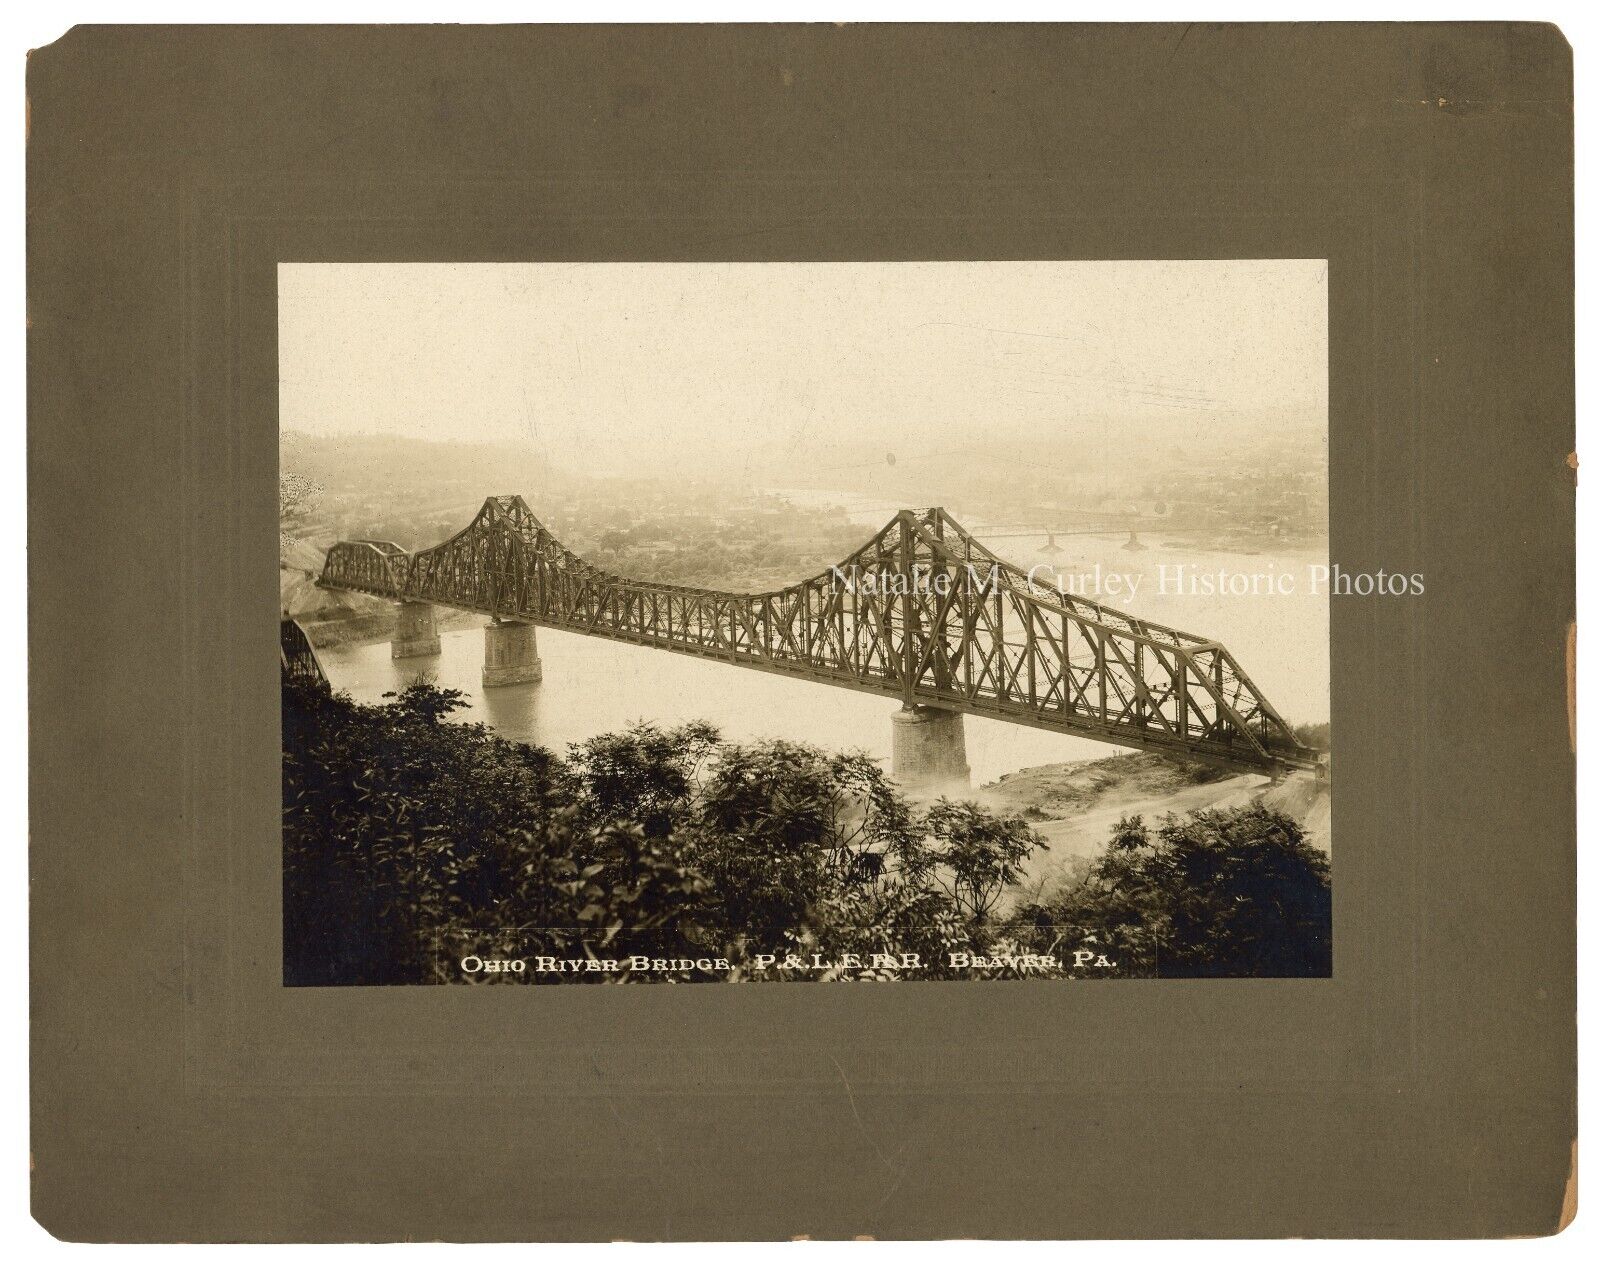 1910s P &L.E.R.R. Pittsburgh & Lake Erie Ohio River Bridge Beaver PA Photo